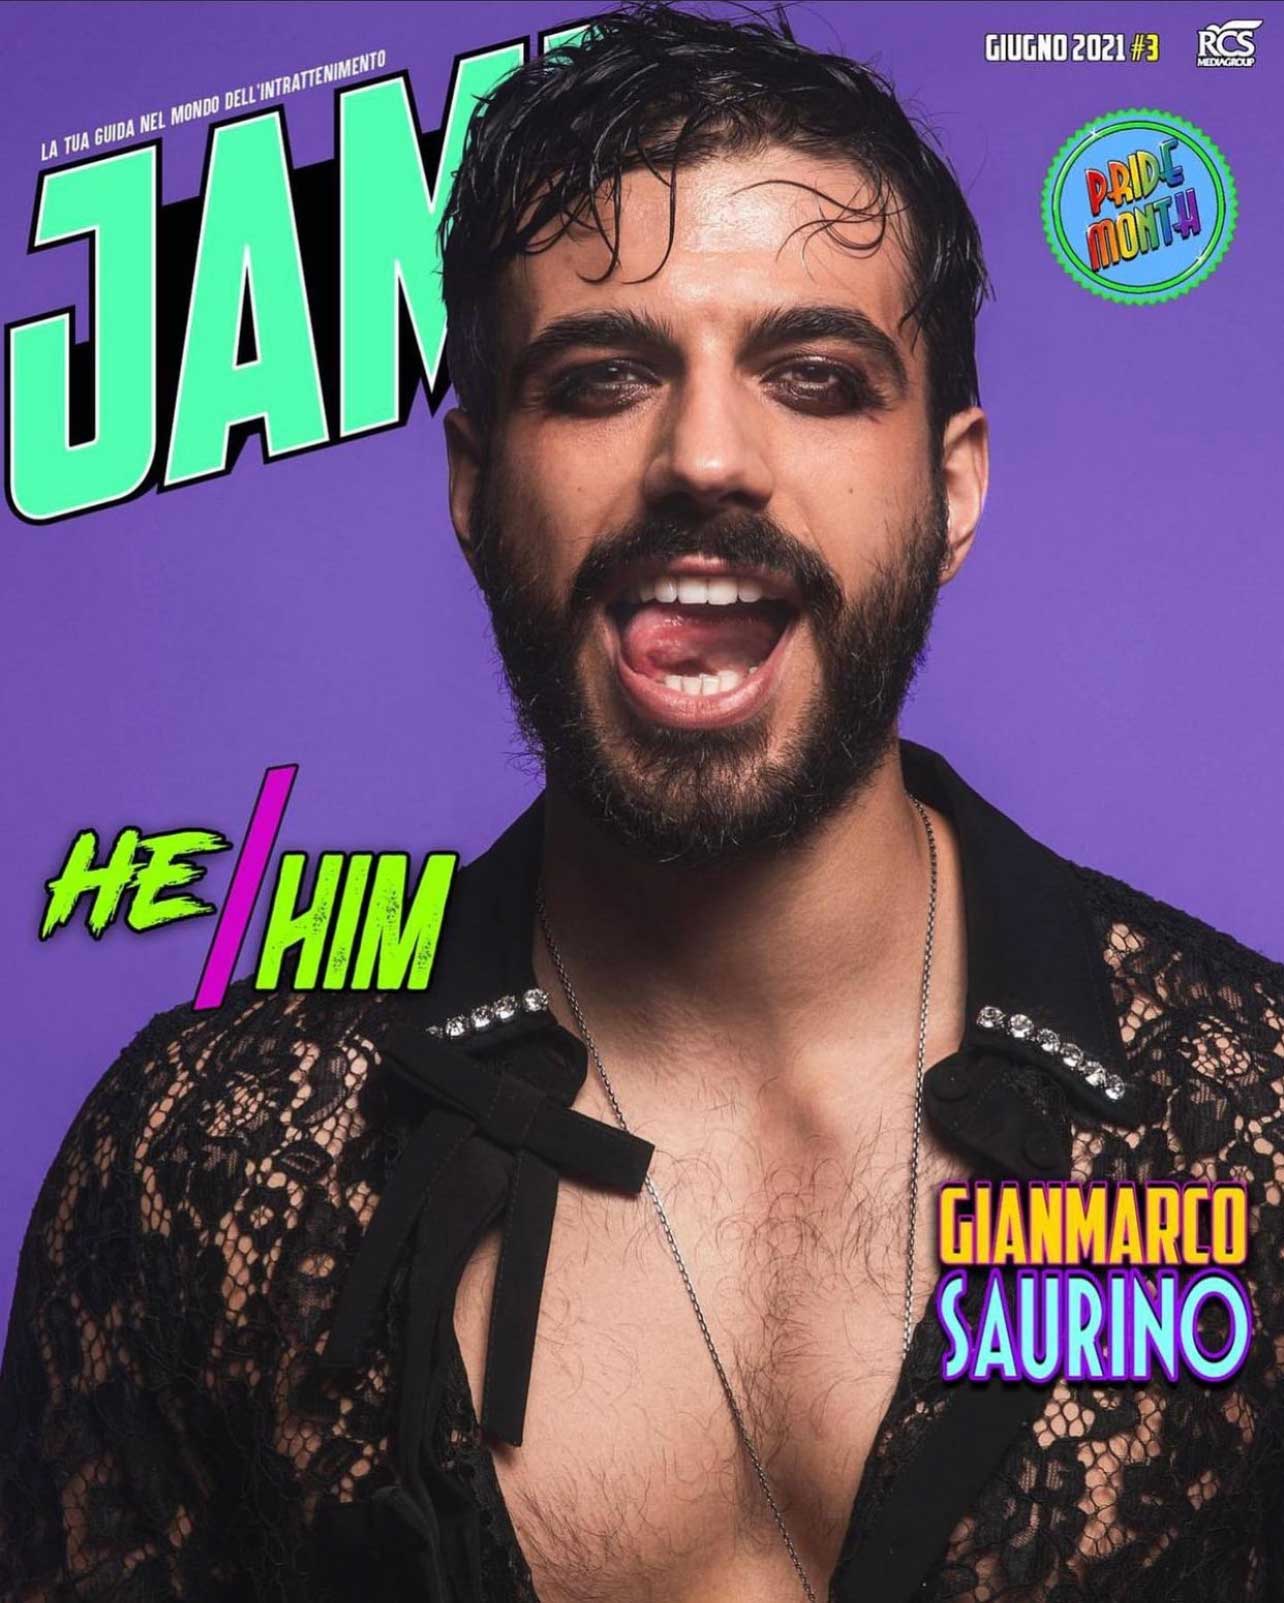 JAMB - Gianmarco Saurino0